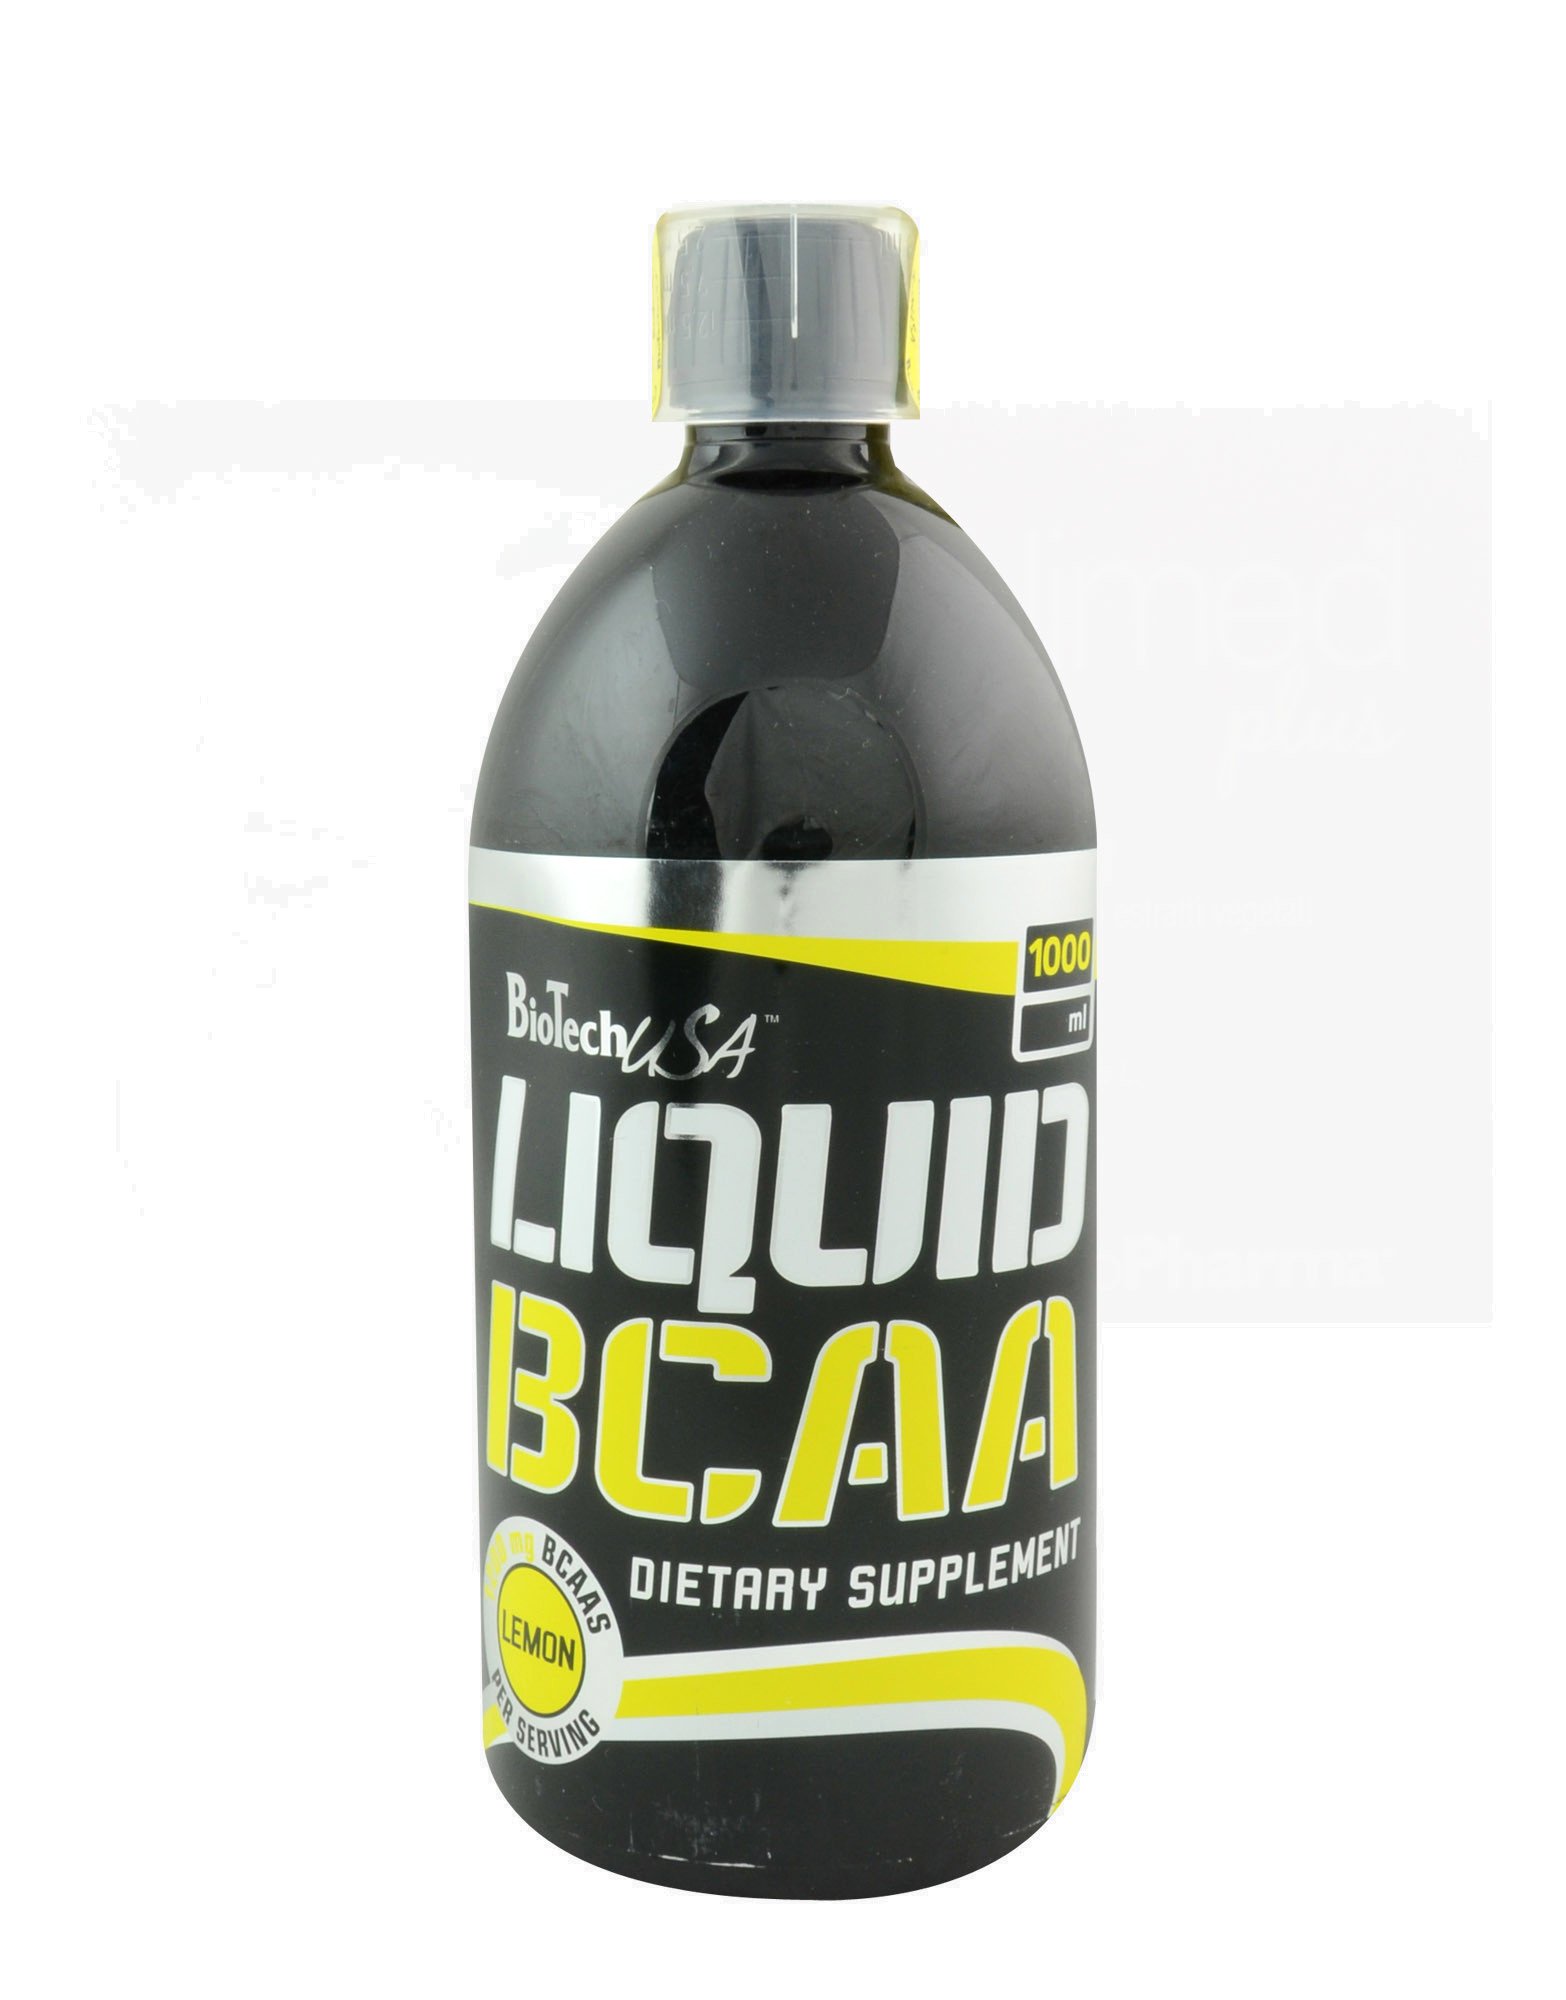 Liquid BСАА, 1000 ml, BioTech. BCAA. Weight Loss recovery Anti-catabolic properties Lean muscle mass 